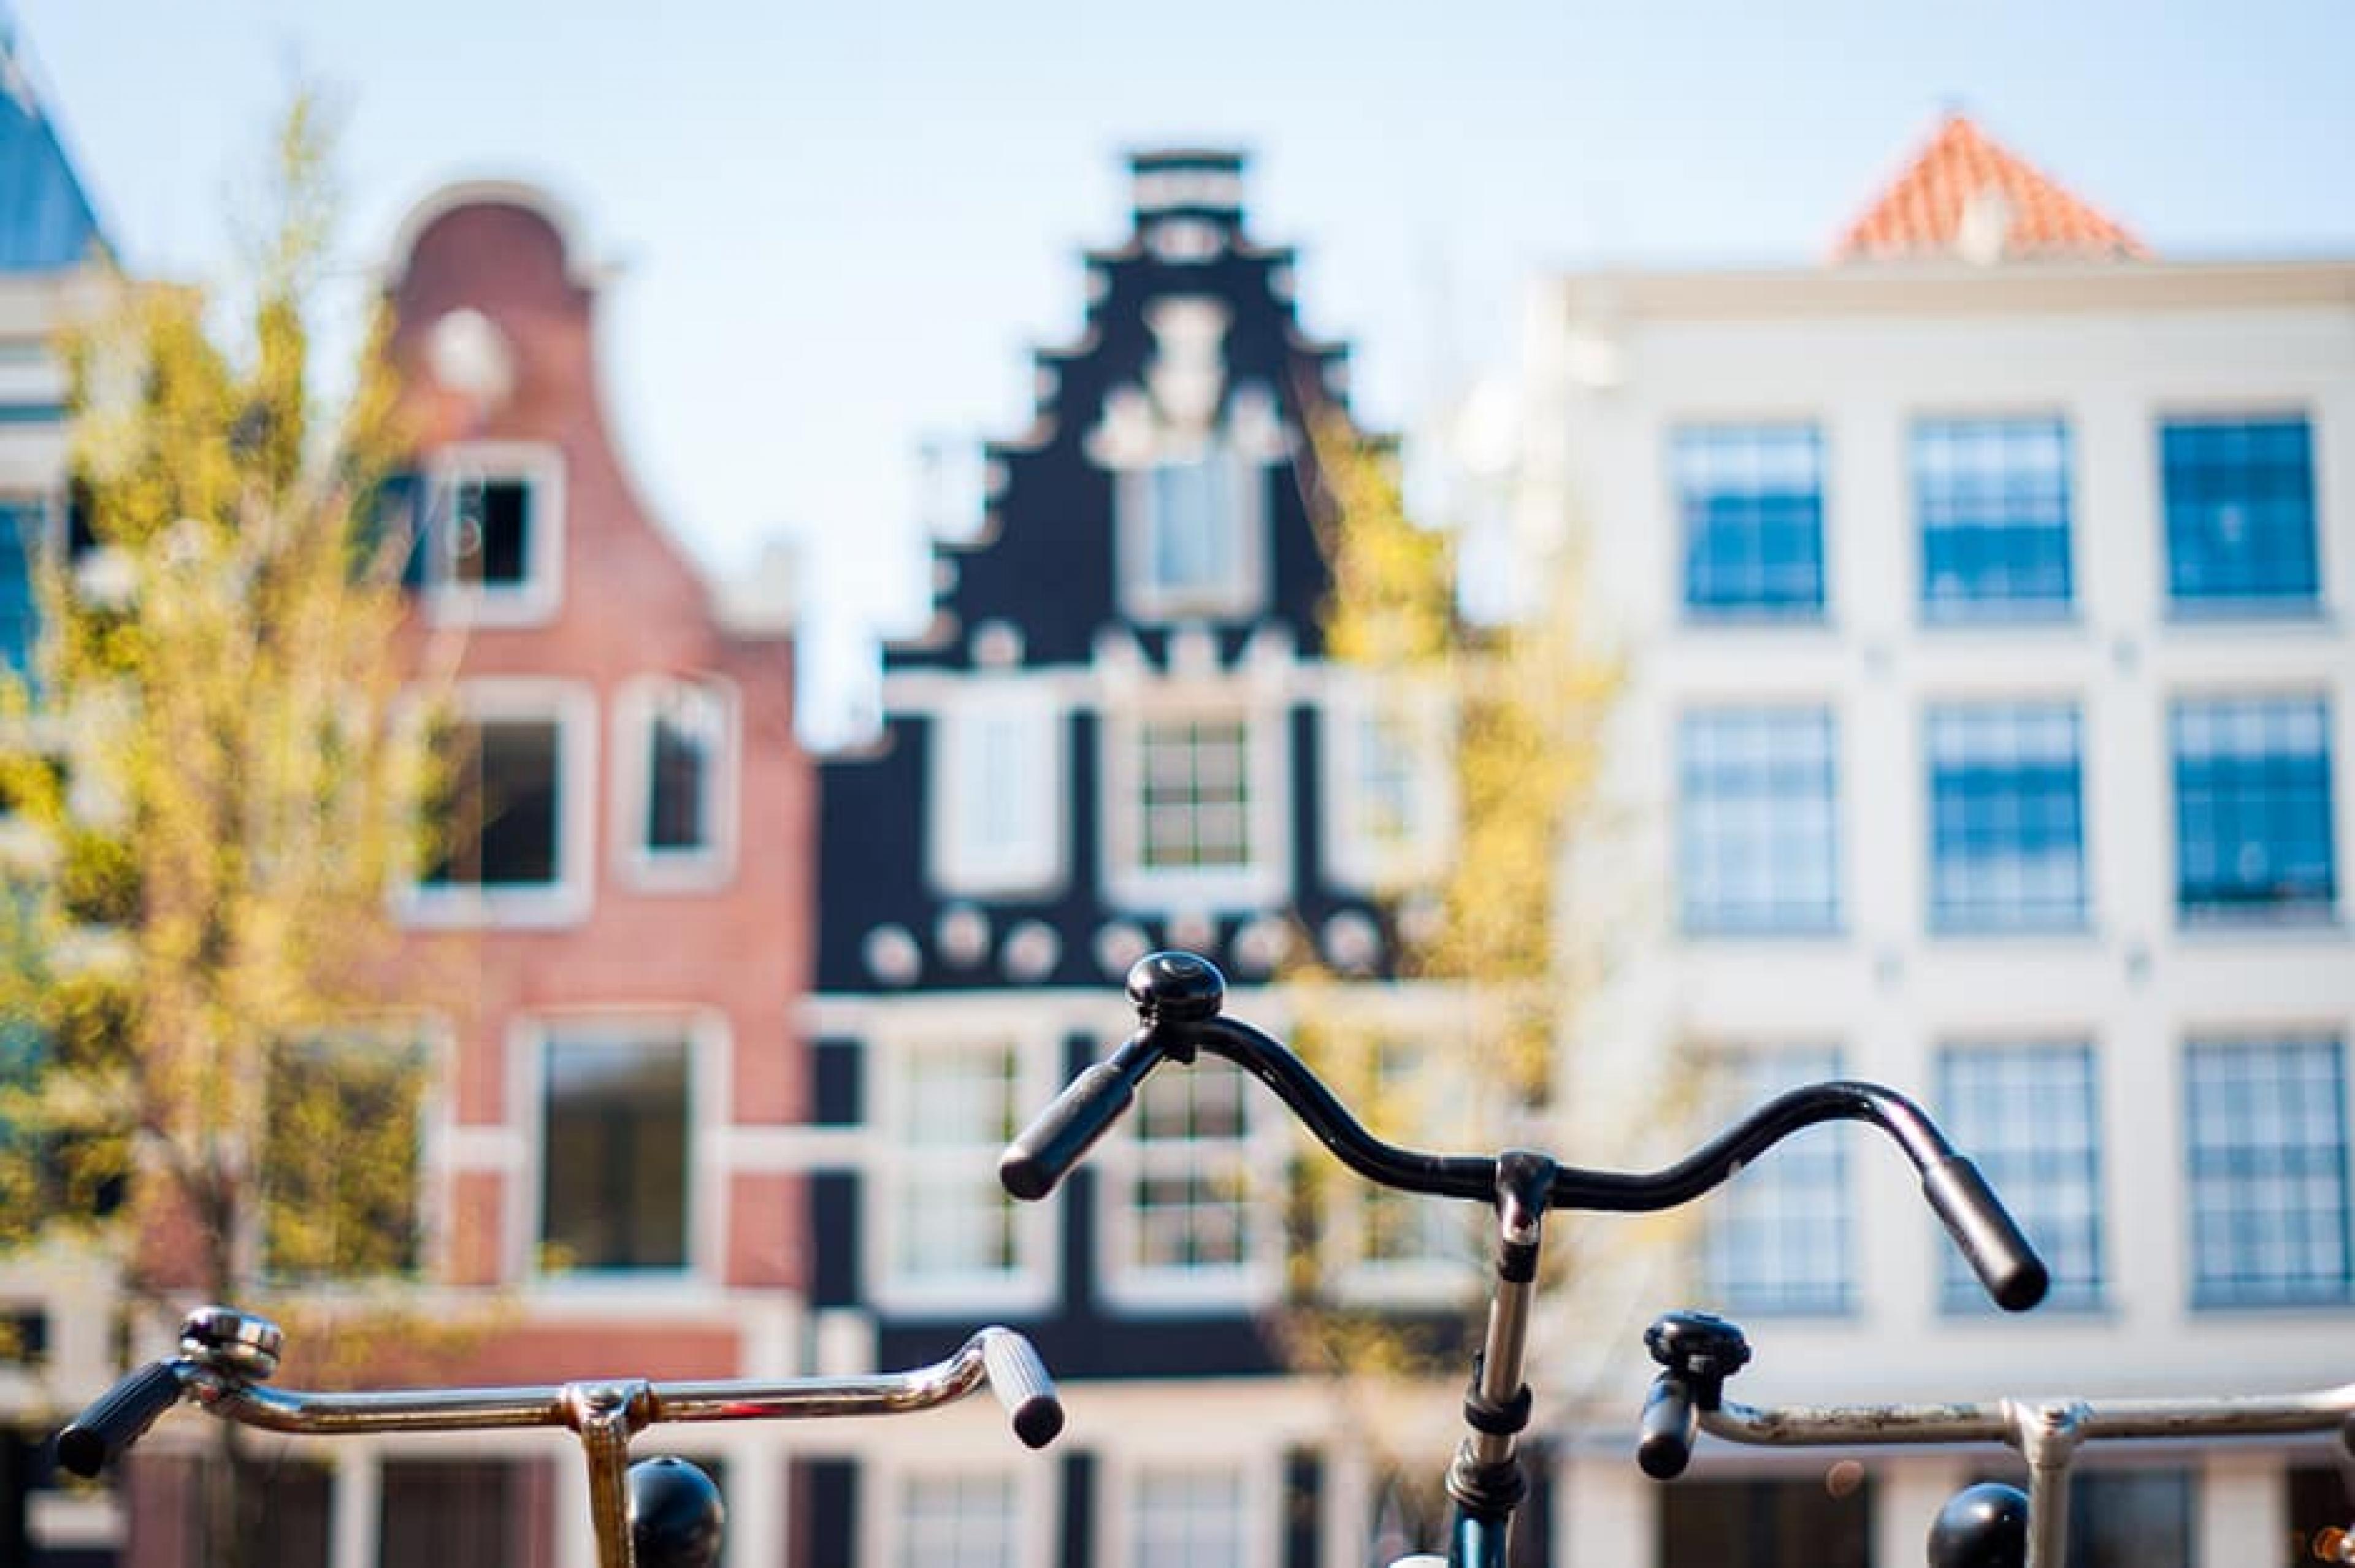 Exterior View-Bike Rentals ,Amsterdam, Netherlands-Courtesy I Amsterdam